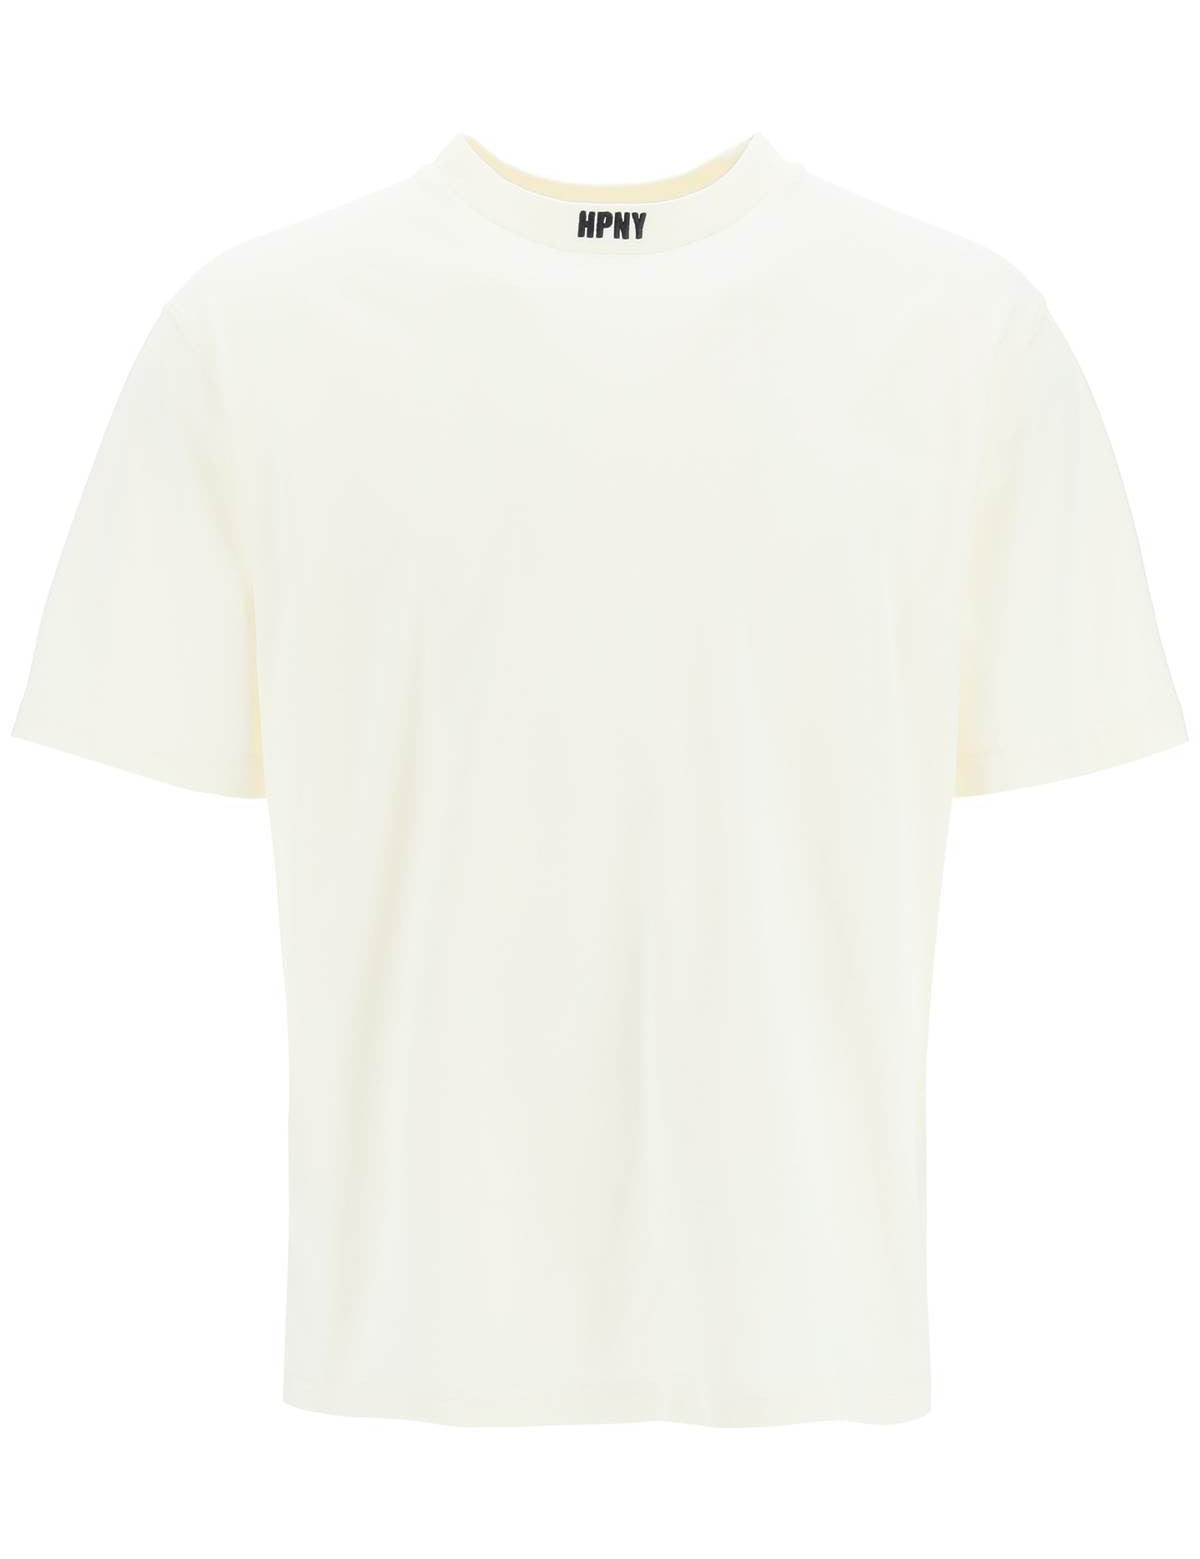 heron-preston-hpny-embroidered-t-shirt_f74c13ba-418c-4a35-83bf-30700813c15e.jpg